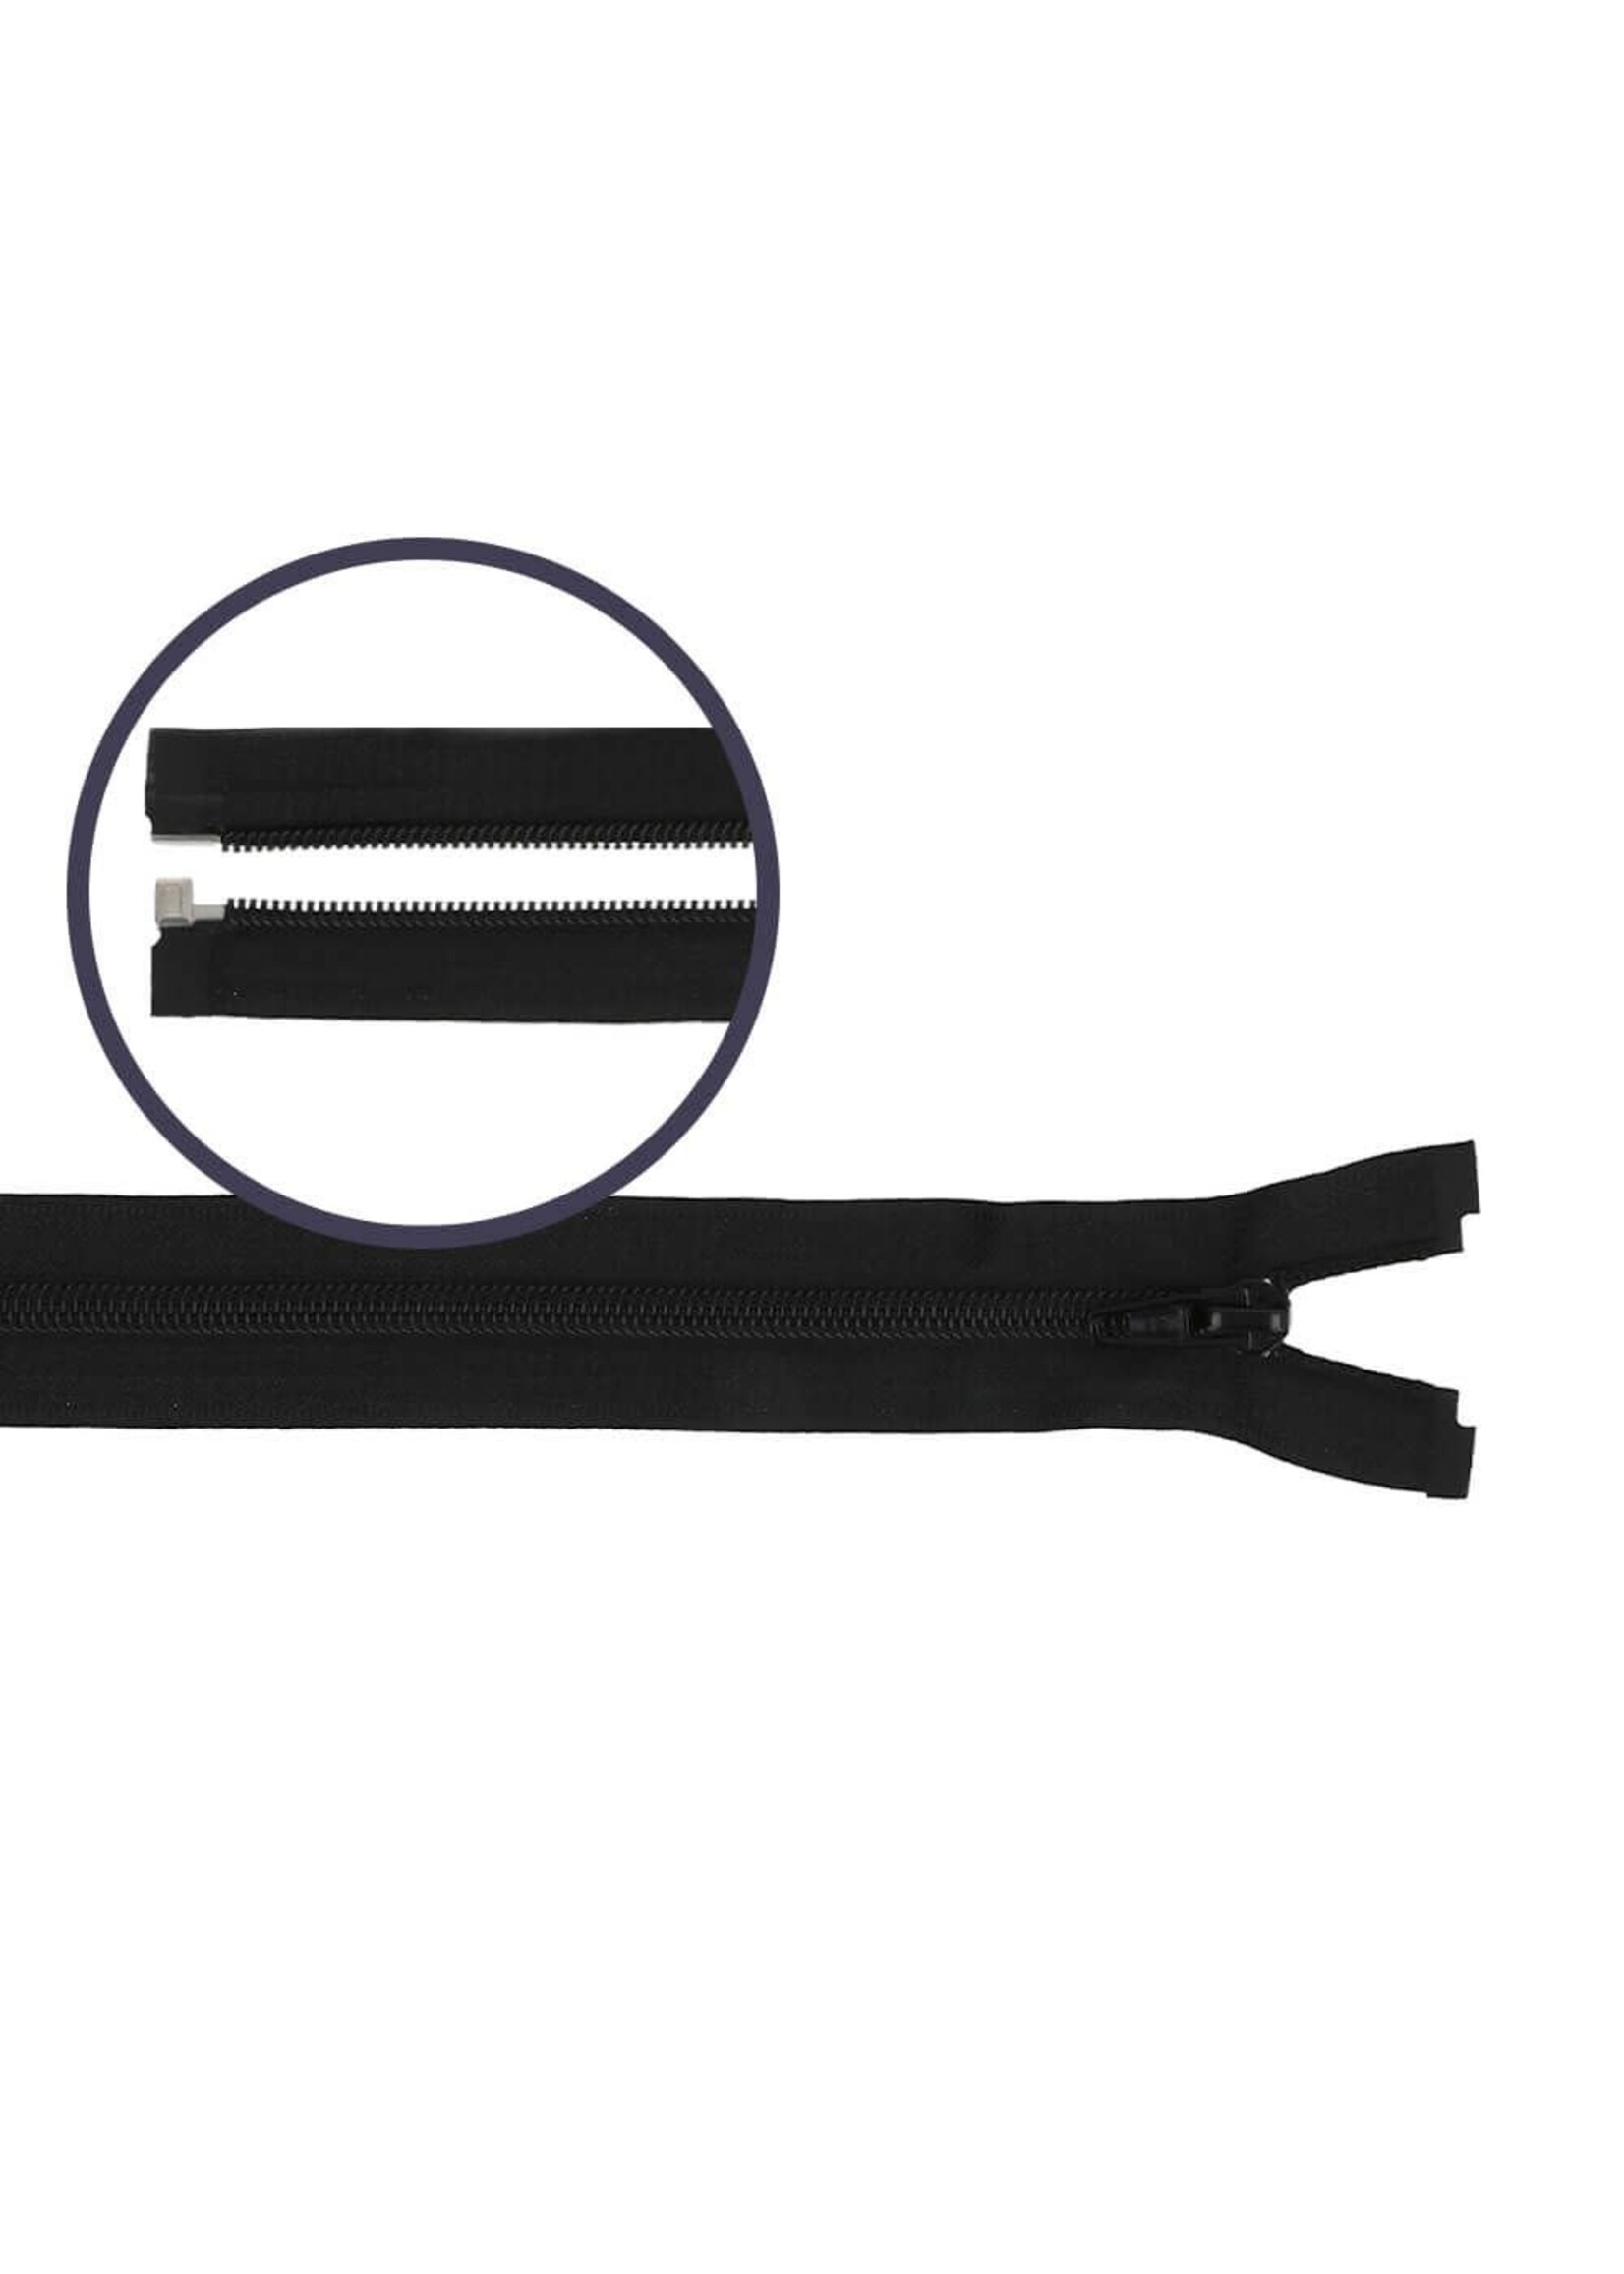 Spiraal rits deelbaar nylon 65cm - 580 zwart